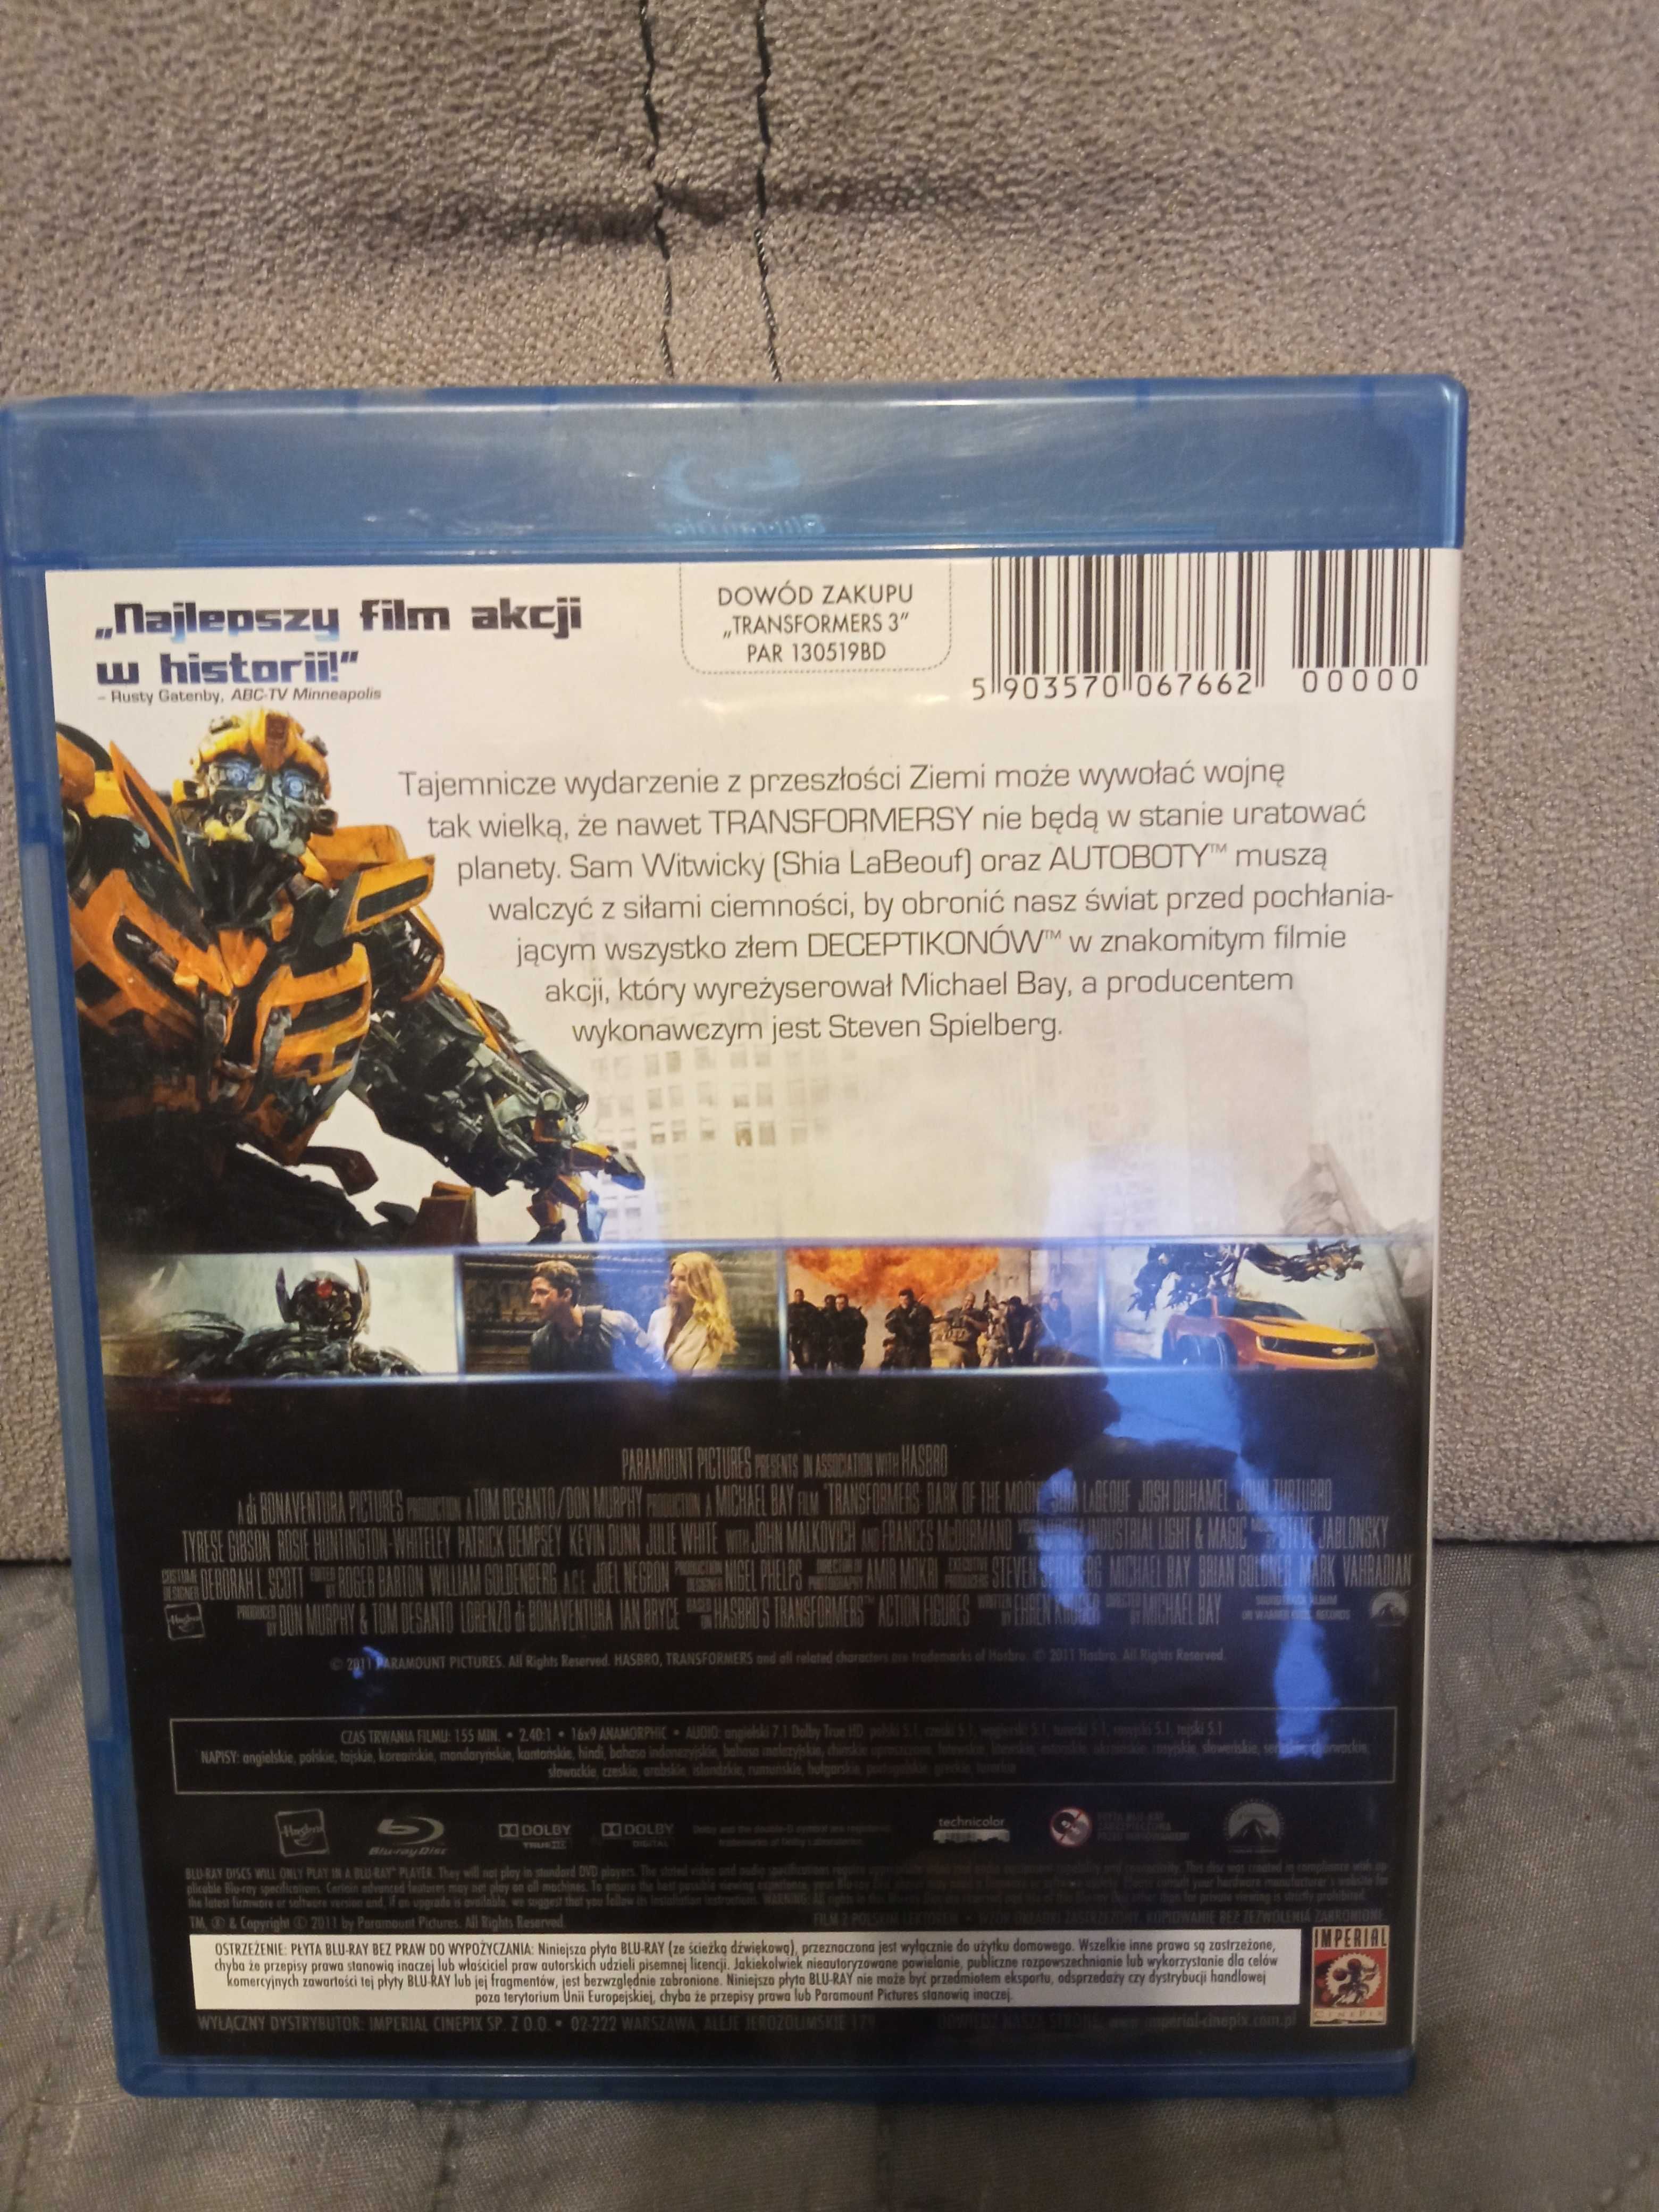 Transformers 3 na Blu Ray